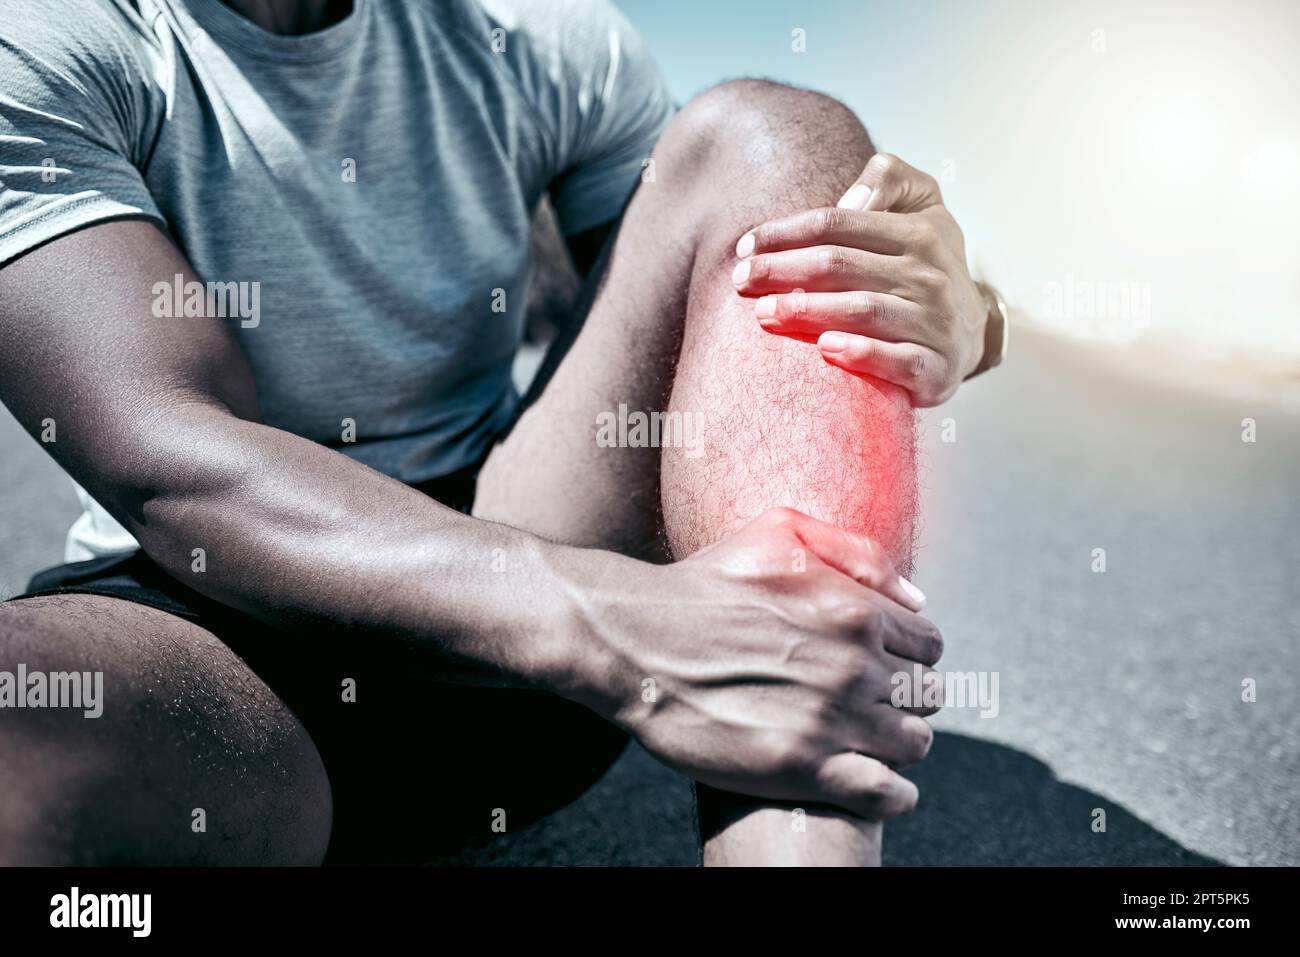 Vecteur Stock Shin splint leg pain knee injury Sport Lower tibia